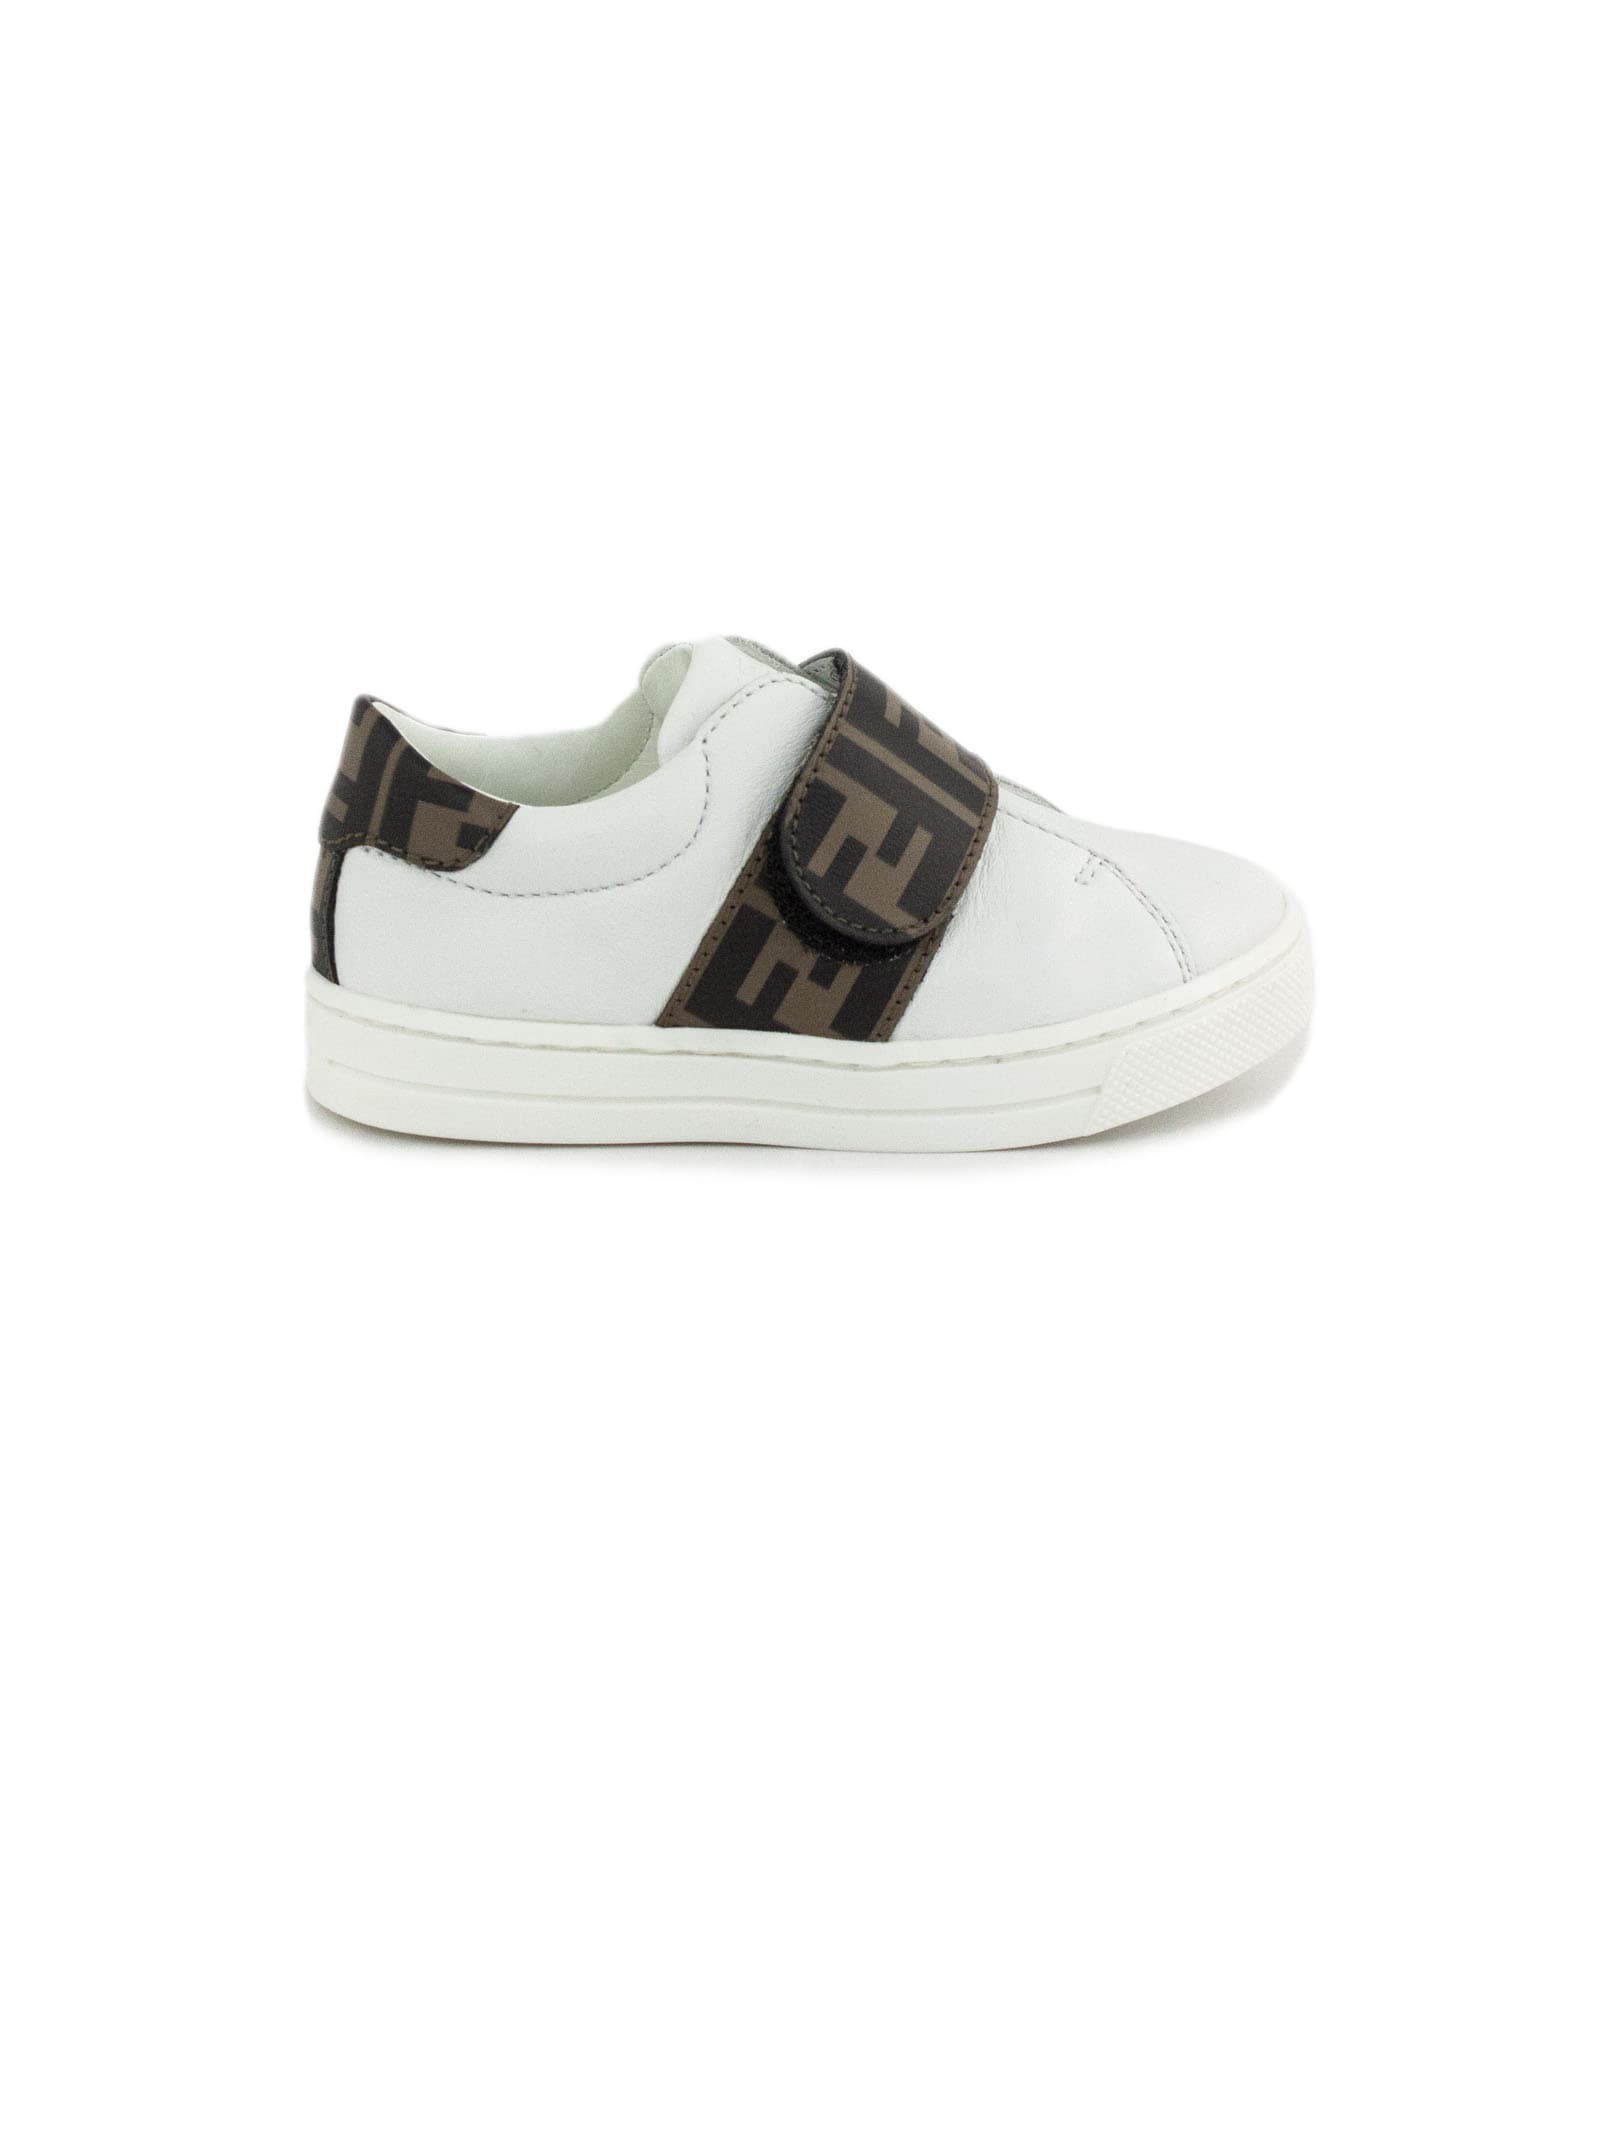 Fendi Sneakers In White Nappa Leather